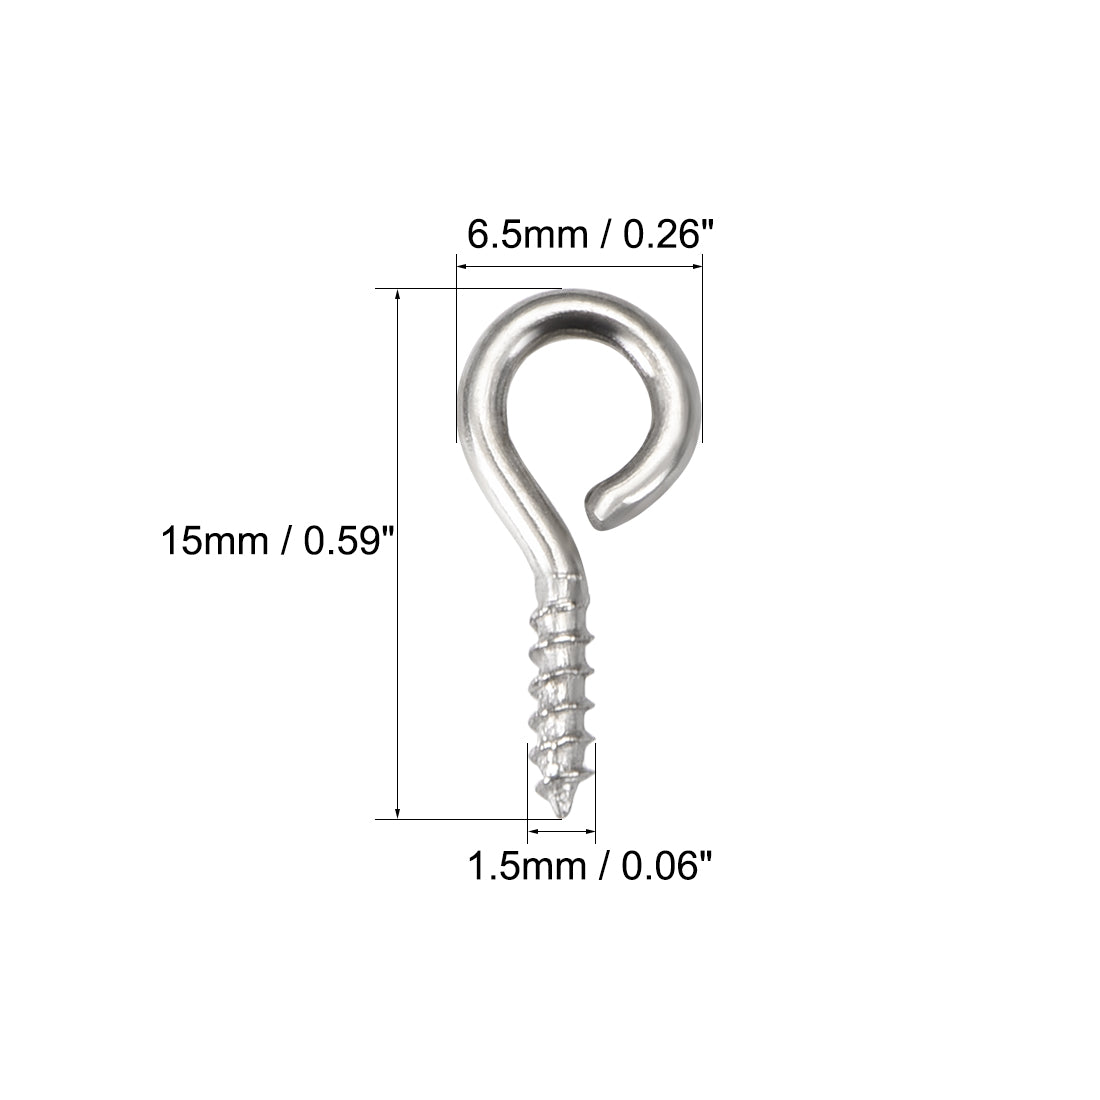 uxcell Uxcell 0.59" Small Screw Eye Hooks Self Tapping Screws Carbon Steel Screw-in Hanger Eye-Shape Ring Hooks Silver 50pcs